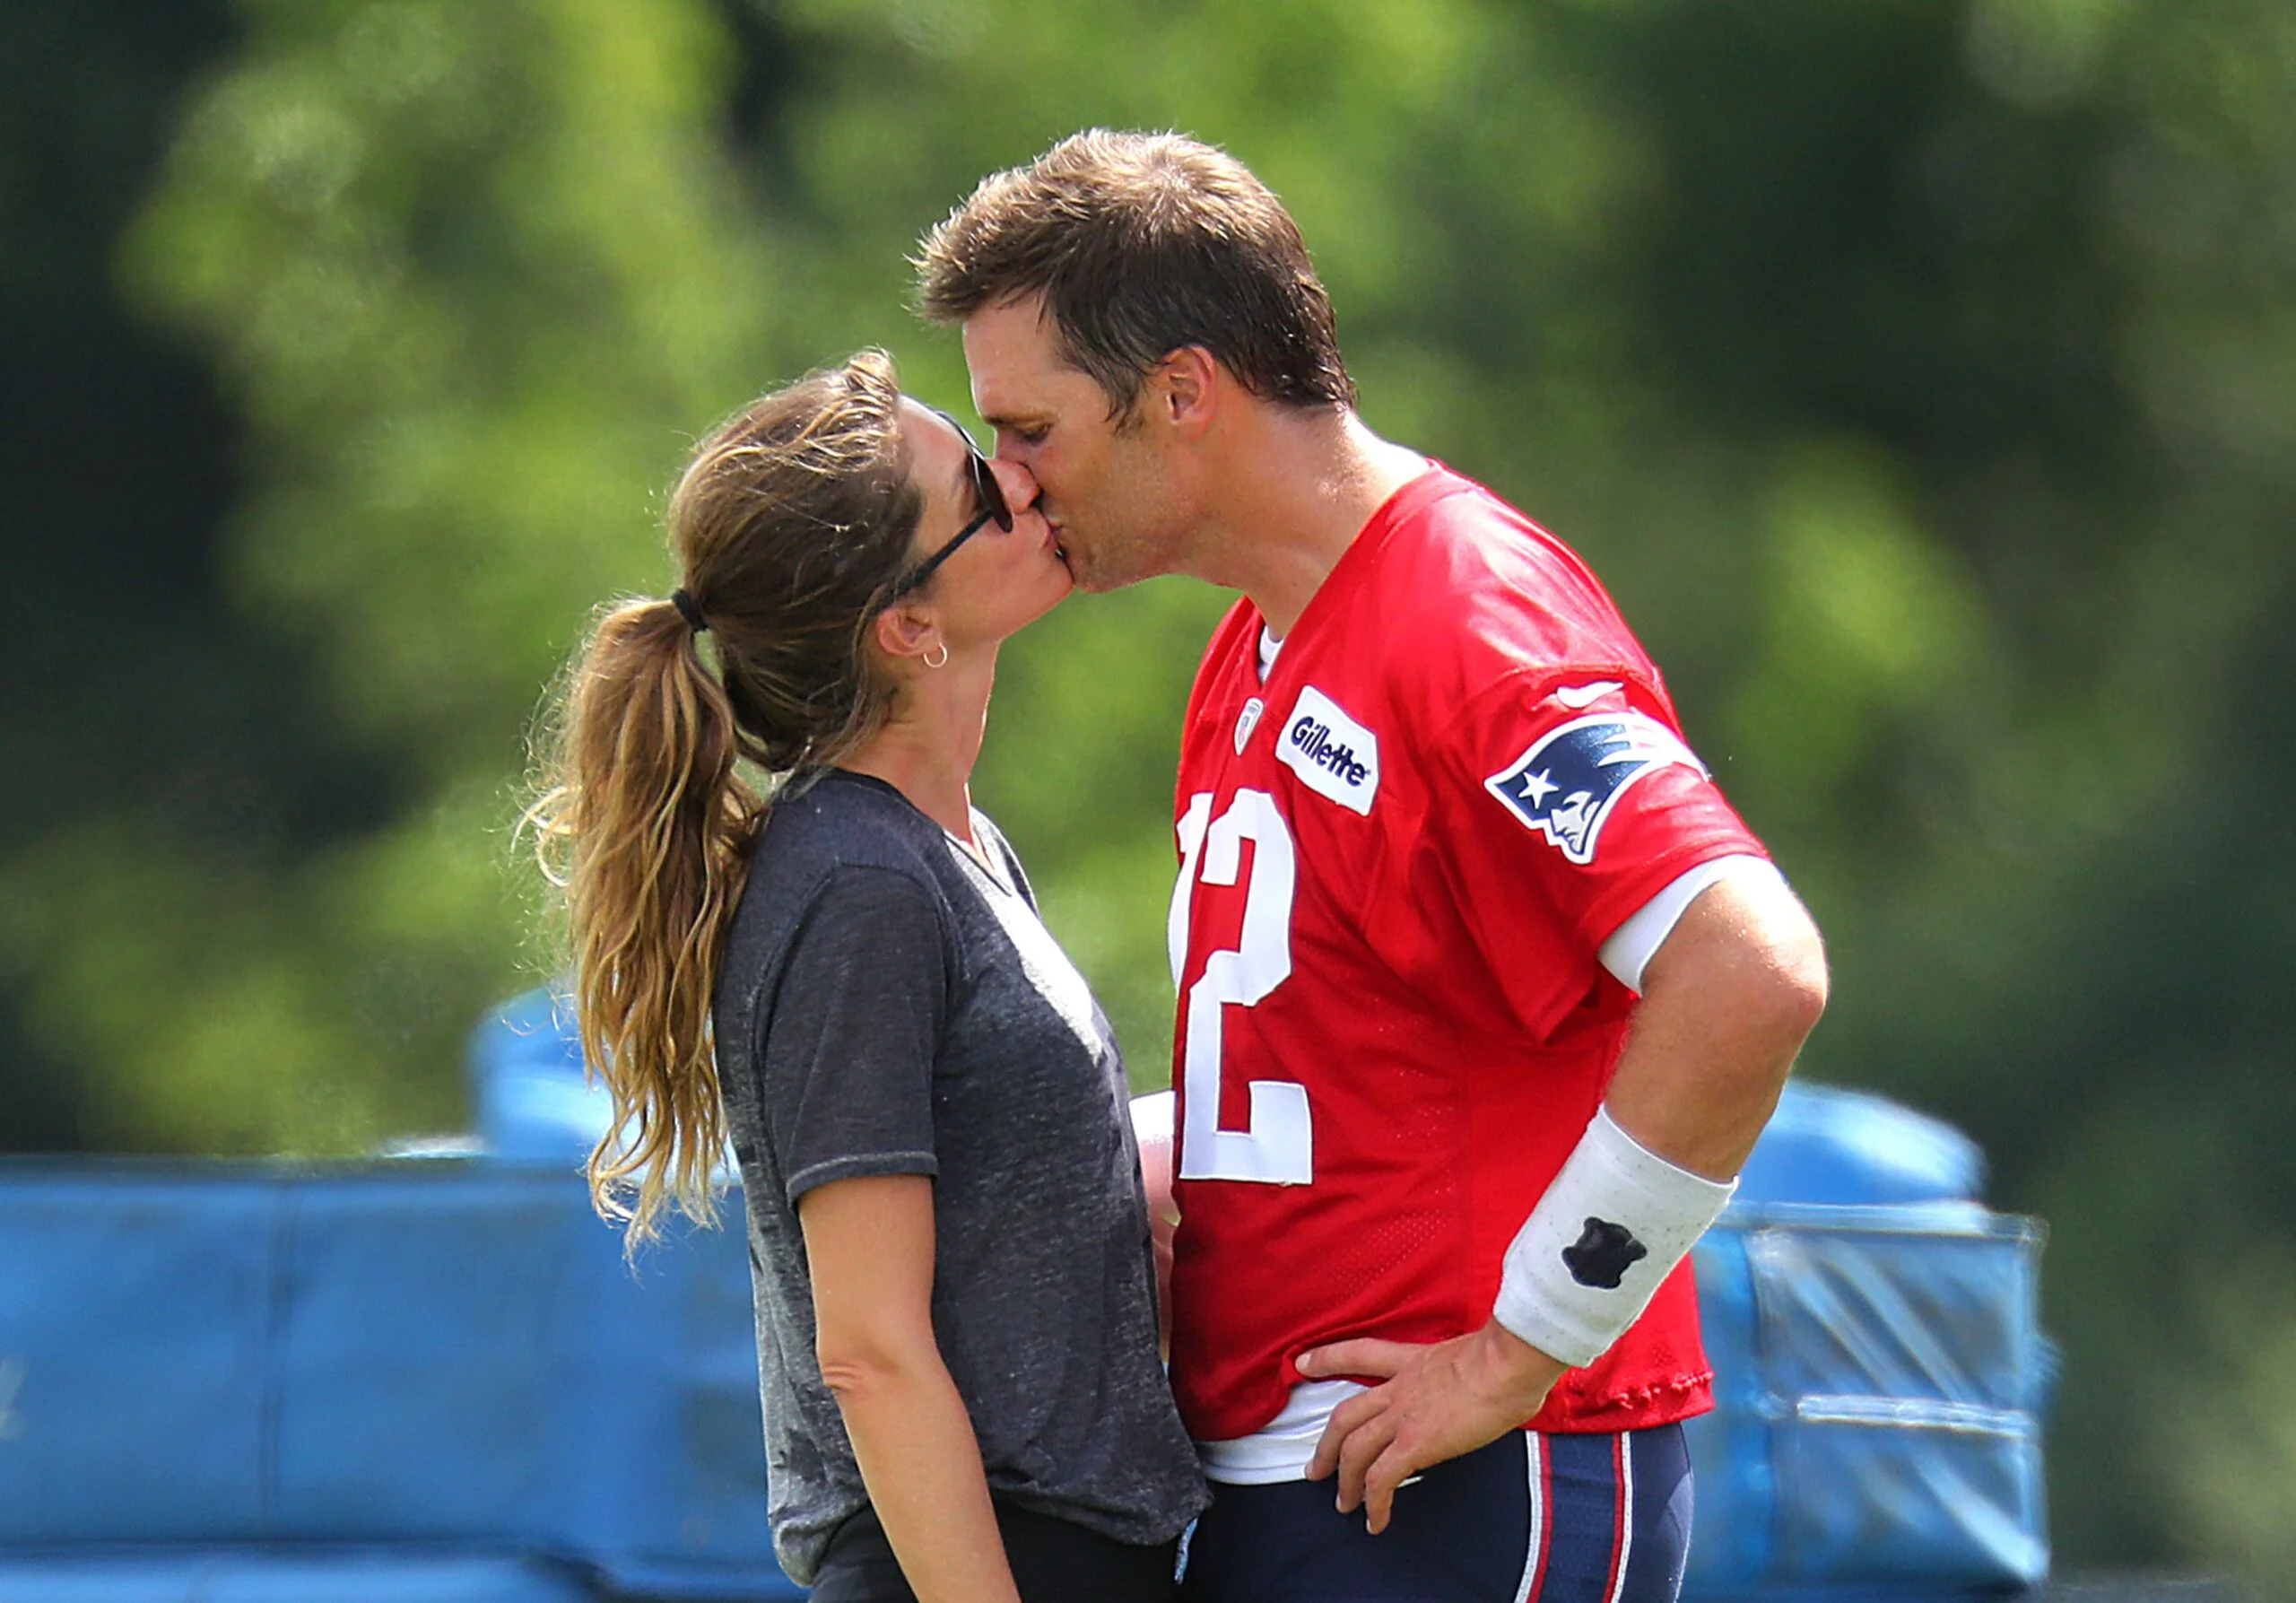 Gisele Bundchen and Tom Brady finalize their divorce